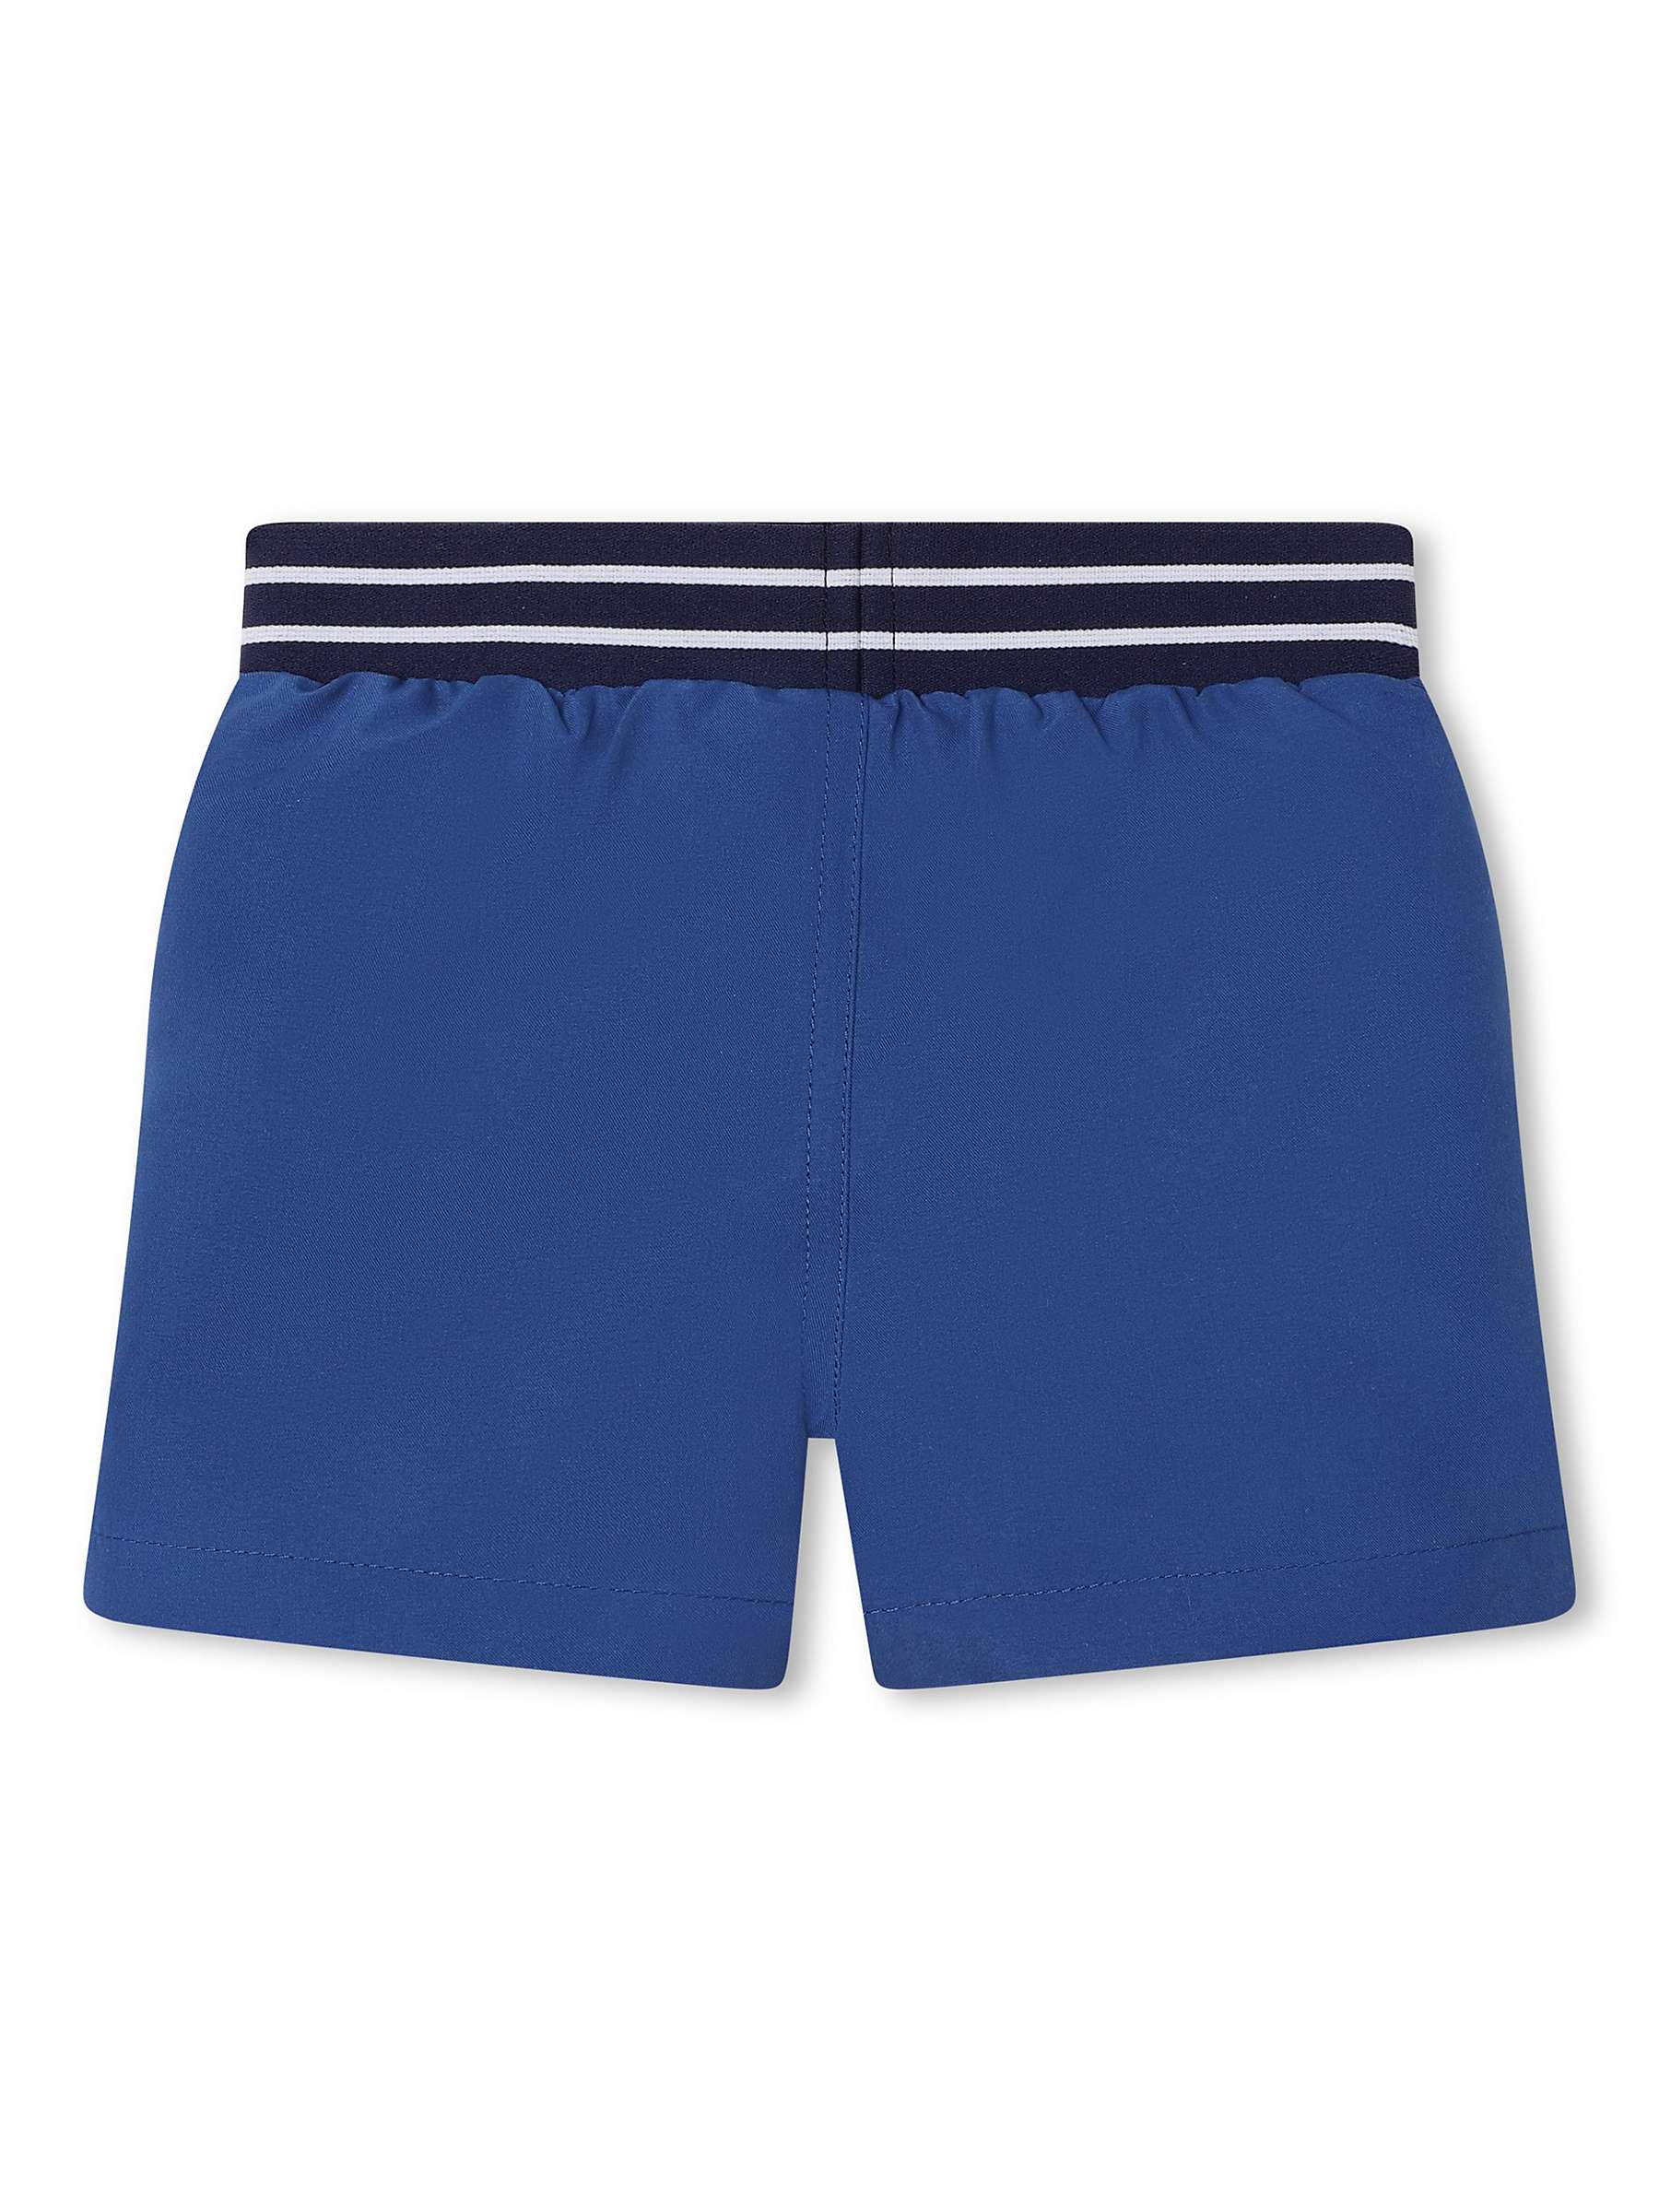 Timberland Baby Swim Shorts, Blue at John Lewis & Partners